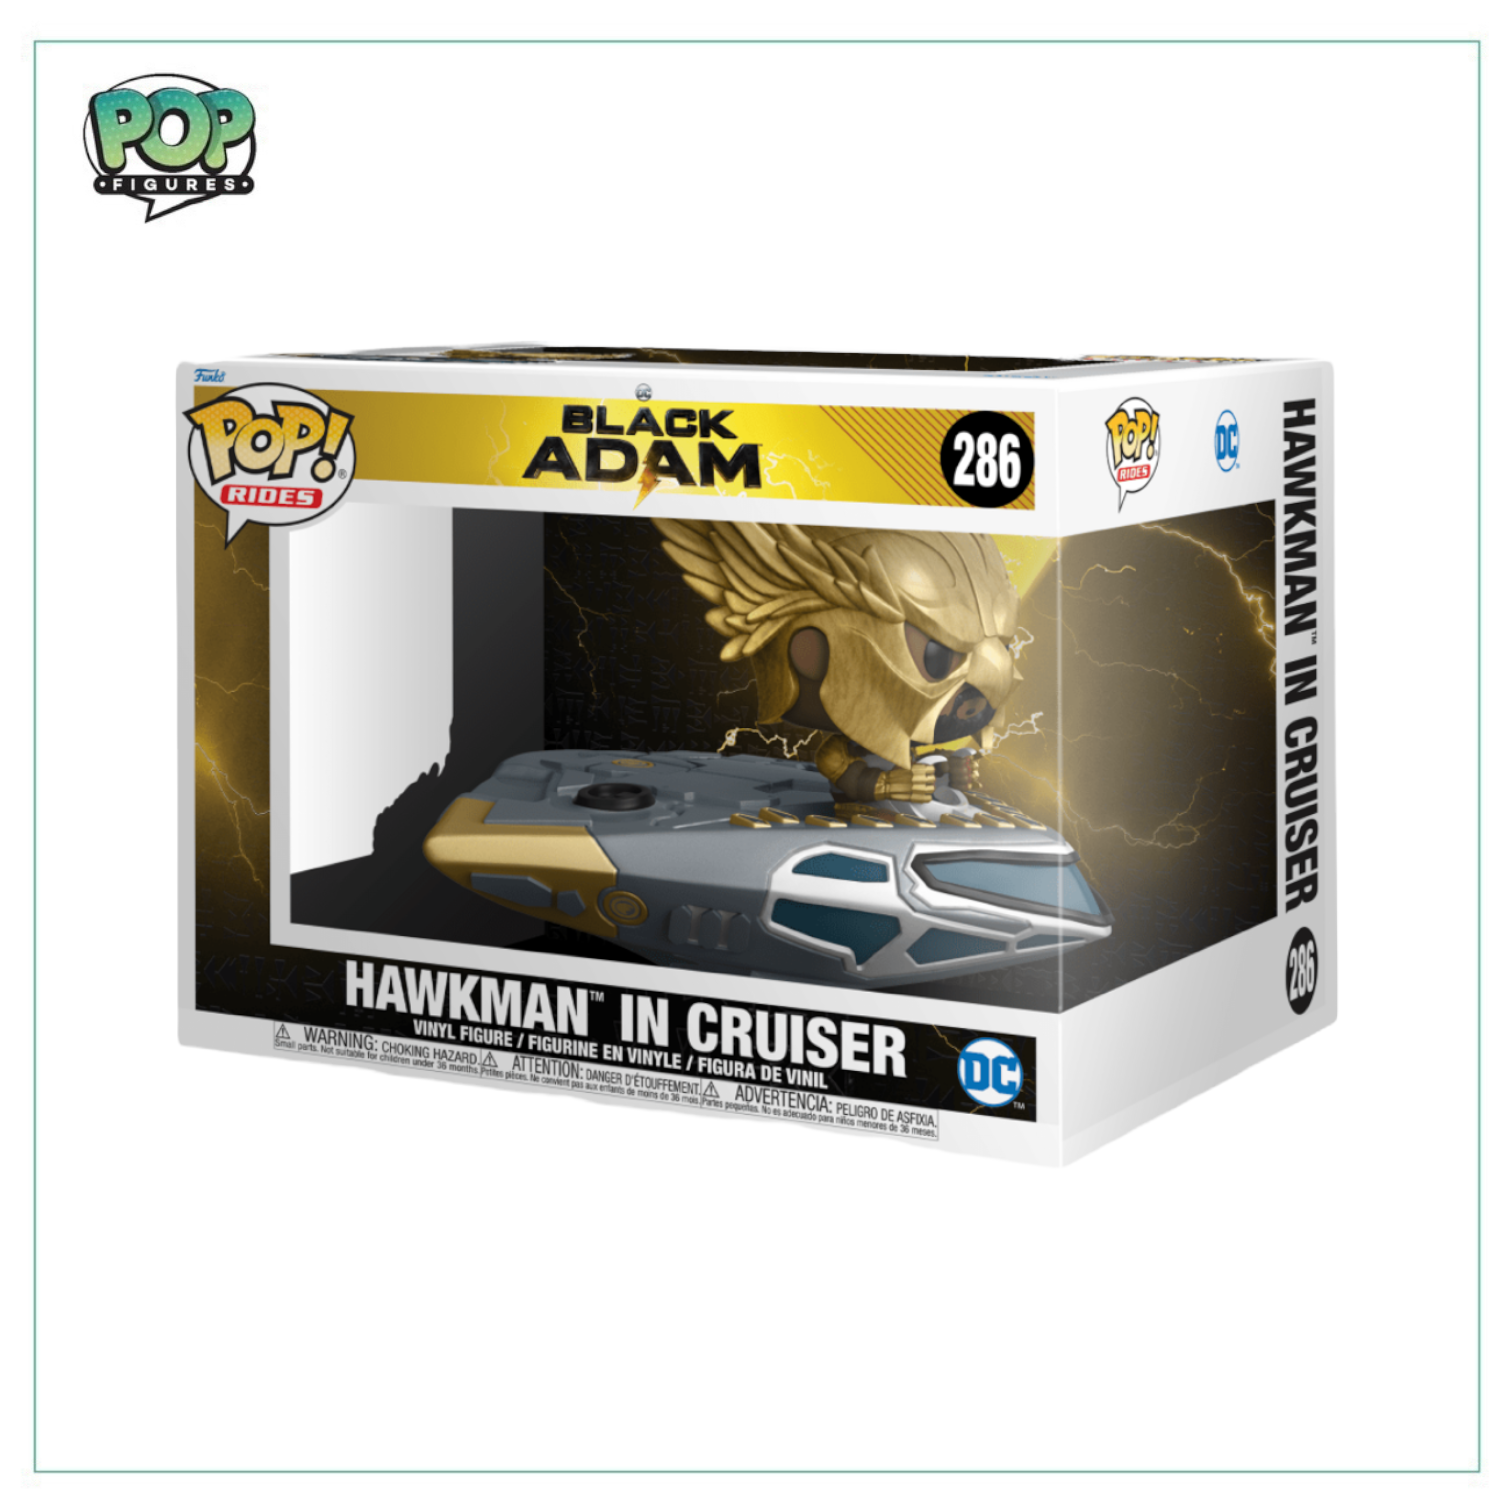 Hawkman in cruiser #286 Deluxe Funko Pop! Ride: Black Adam - Angry Cat